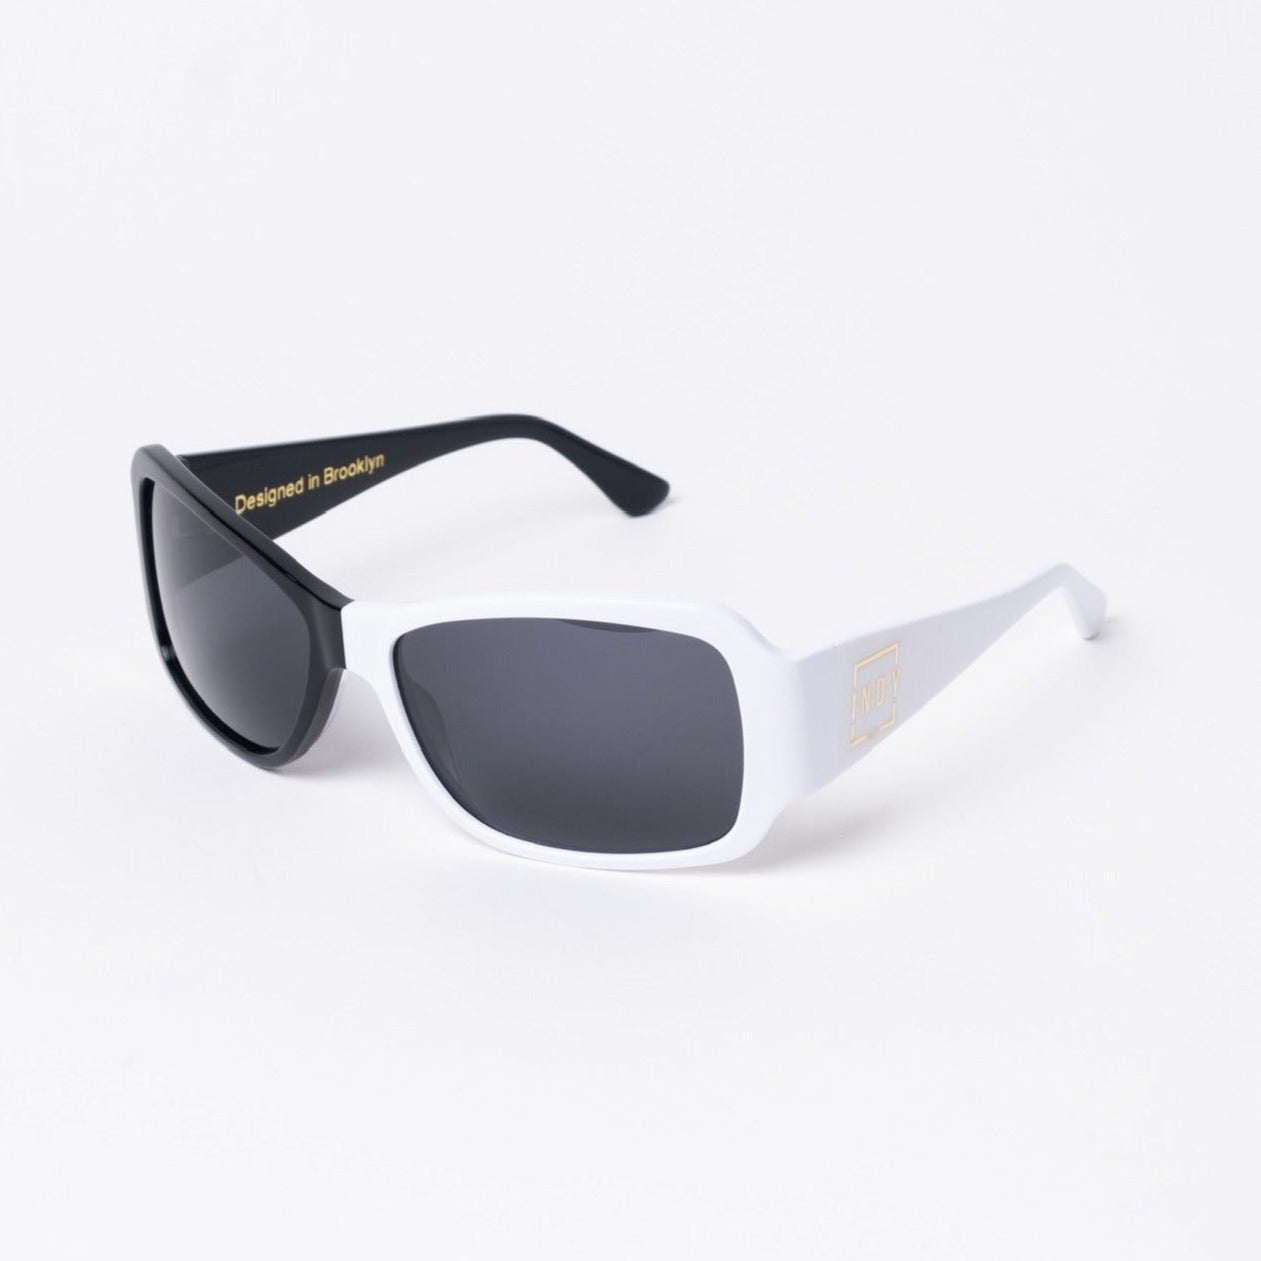 a side view of monochrome sunglasses